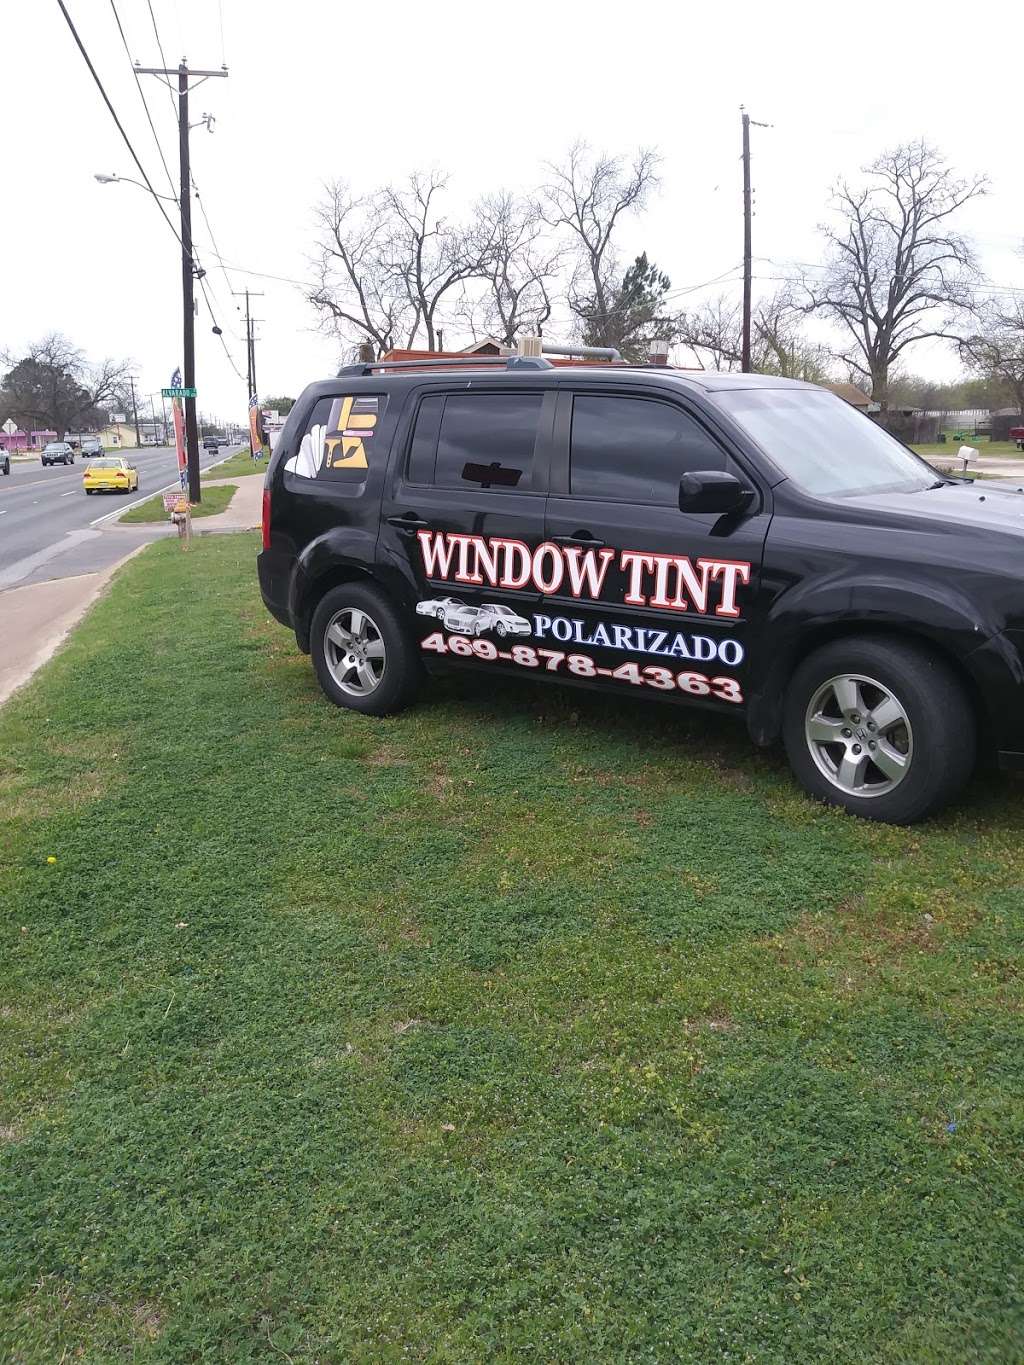 Window Tint Polarizado | 2802 Cartwright St Ste A, Dallas, TX 75212 | Phone: (469) 878-4363